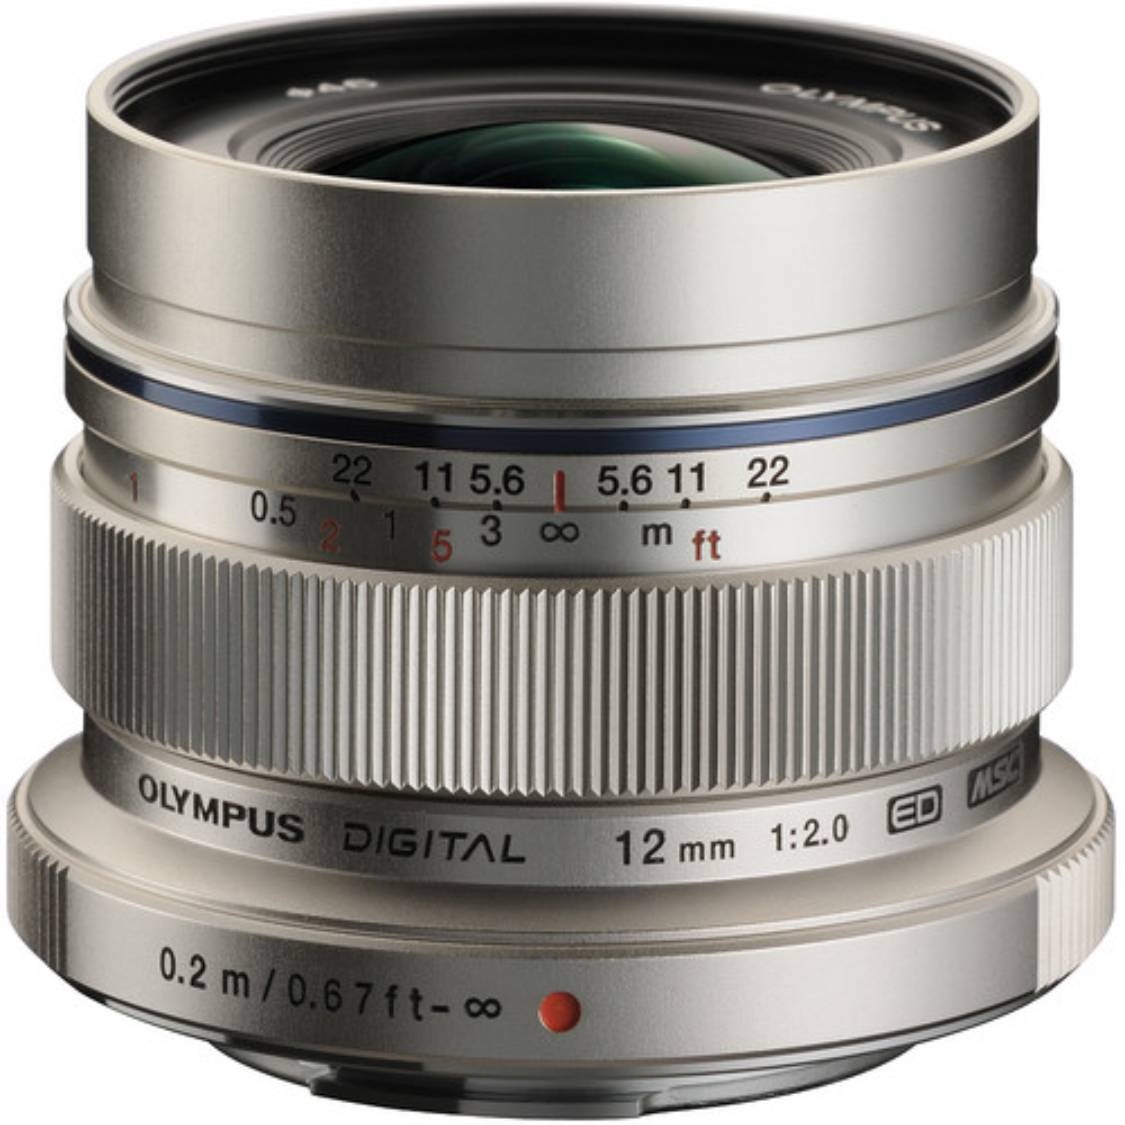 Olympus MSC 12mm F2.0 Lens (silver) - Open Box